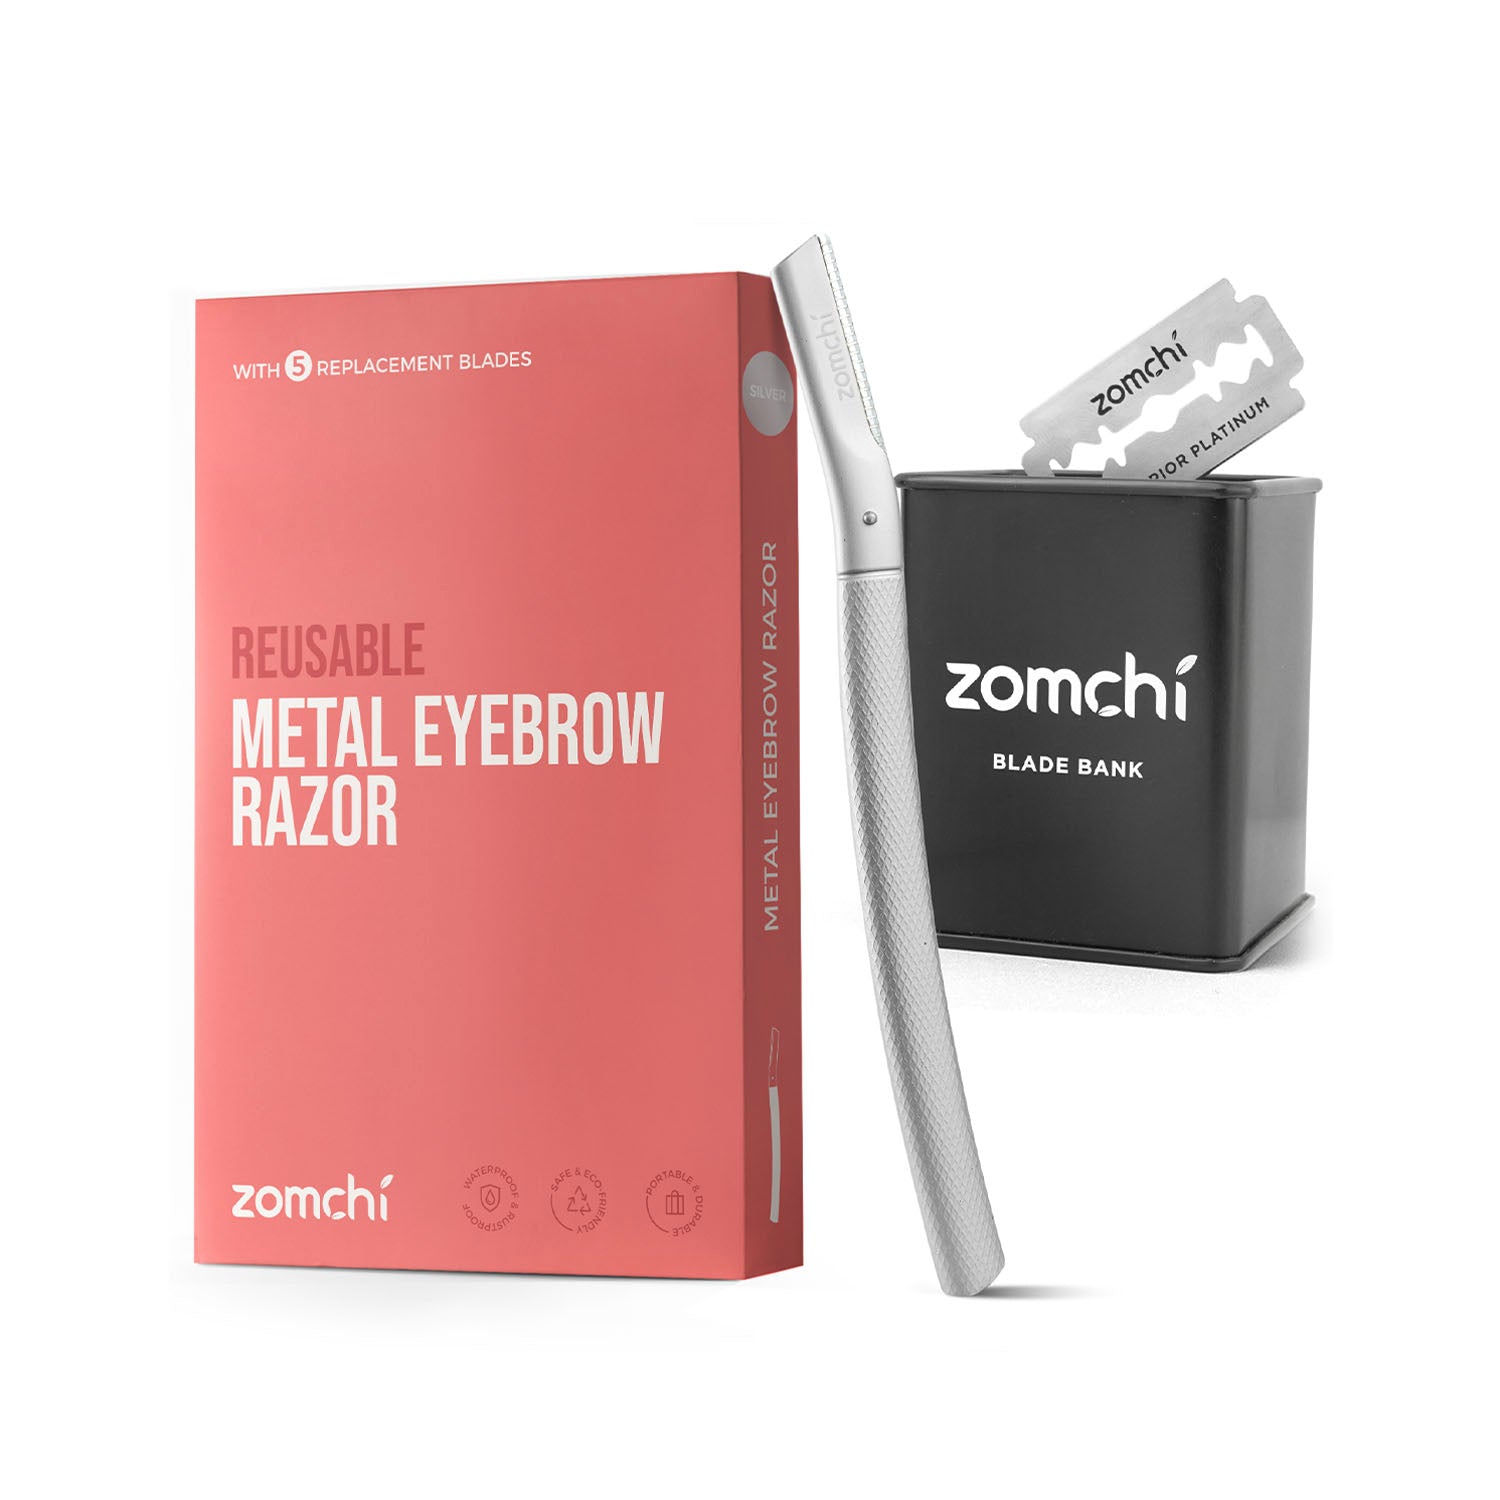 Zomchi Silver Eyebrow Razor With Razor Blade Bank